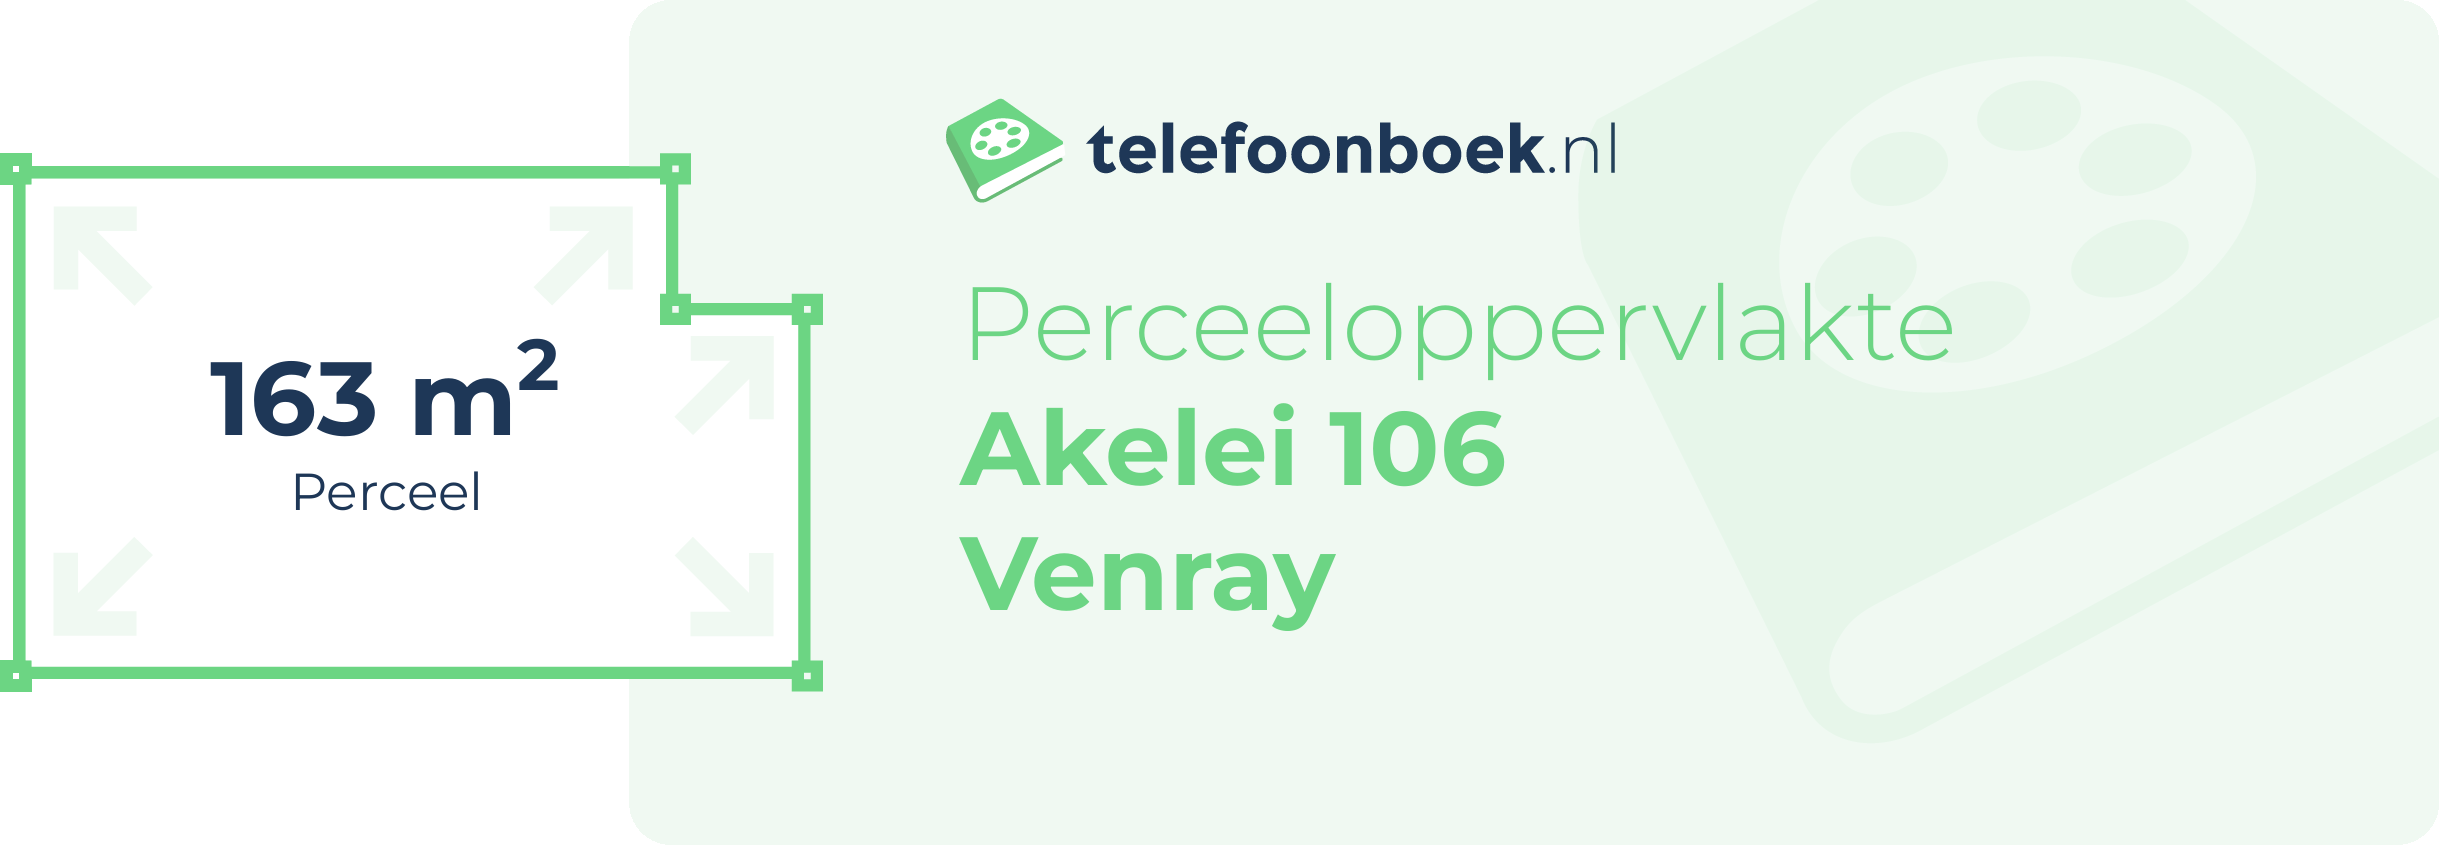 Perceeloppervlakte Akelei 106 Venray